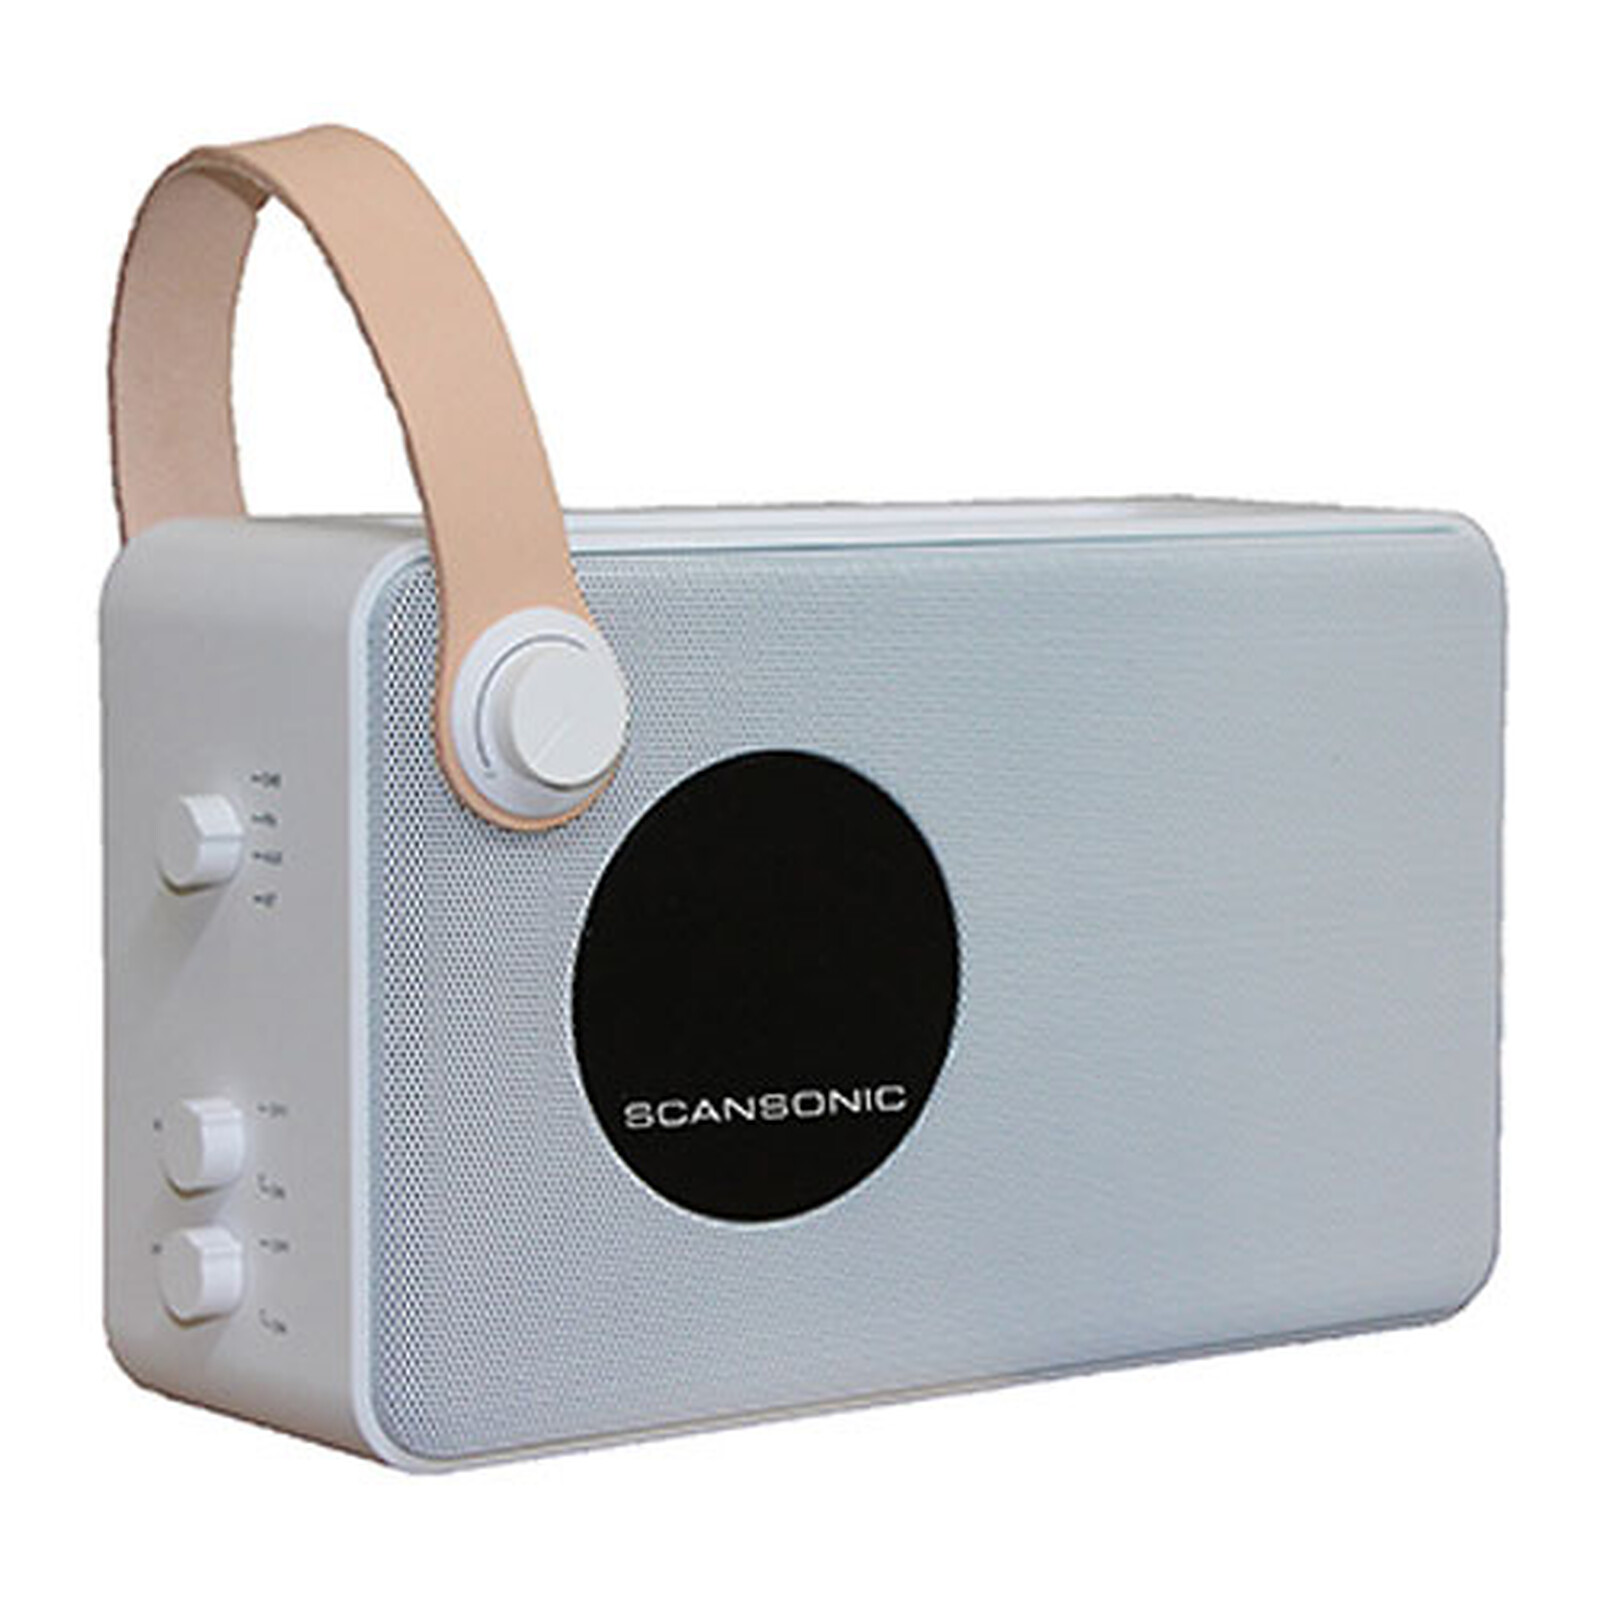 Enceinte nomade Bluetooth Radio DAB+ - MY SPEAKER+, Radios